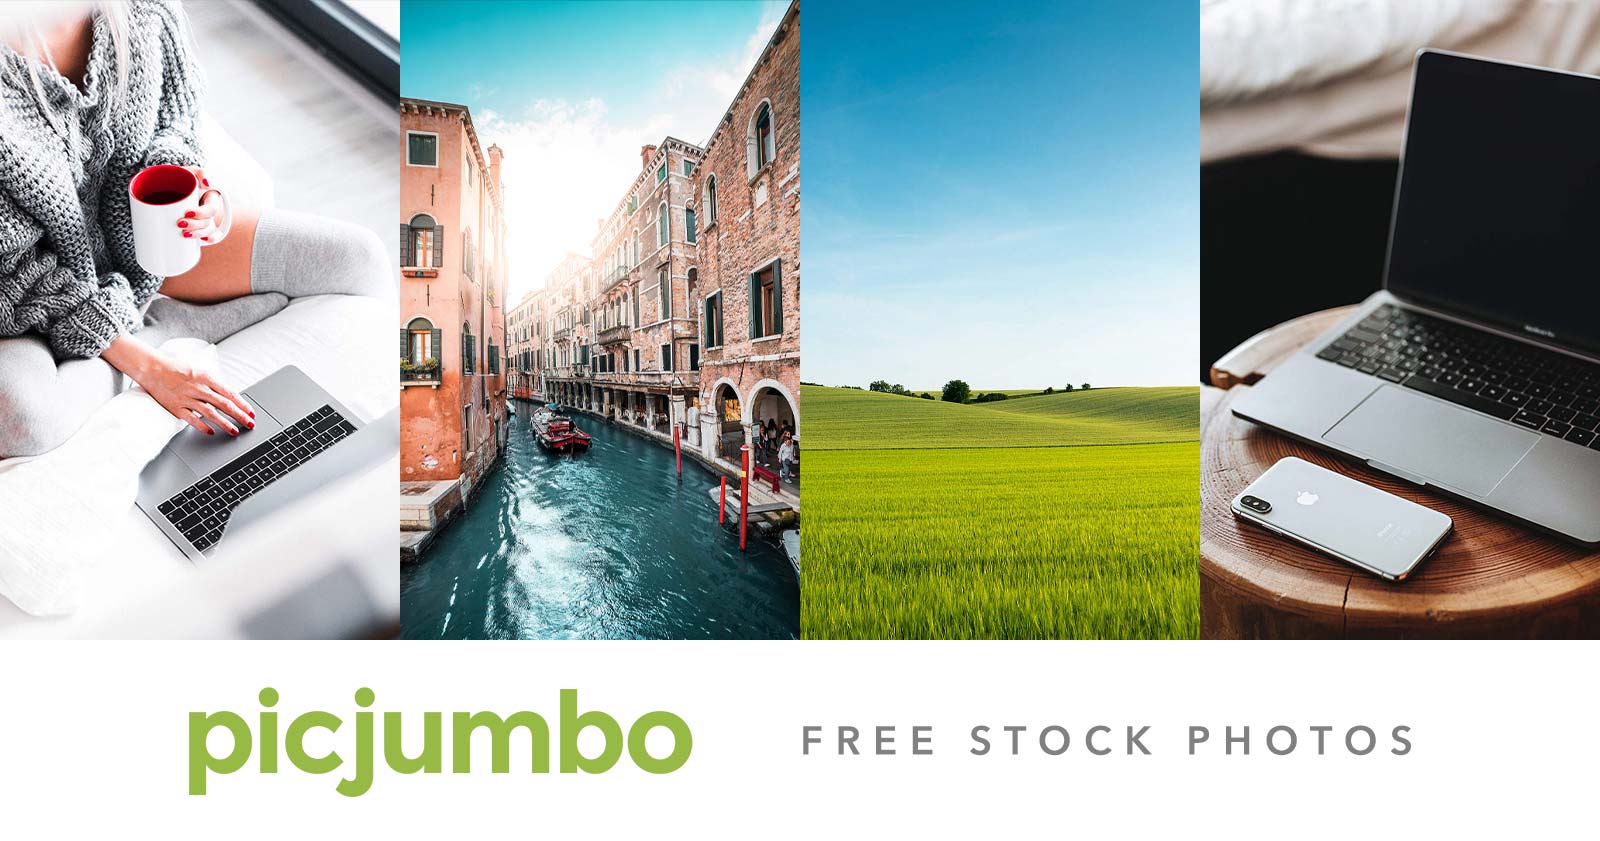 Free Stock Photos • picjumbo